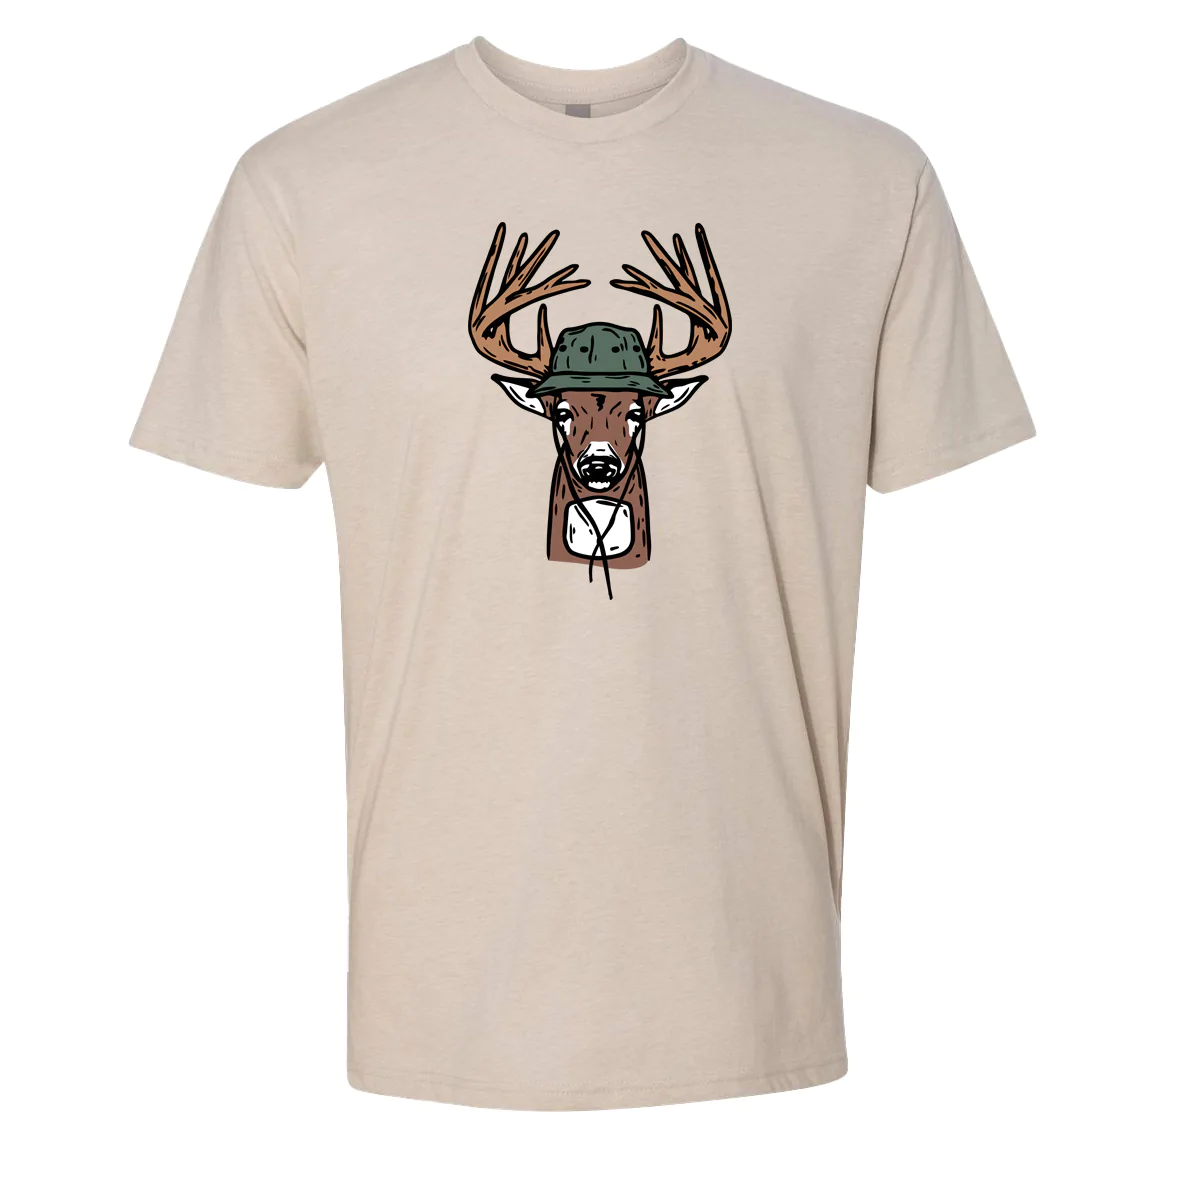 The Hunting Public BUCK-et Hat T-Shirt